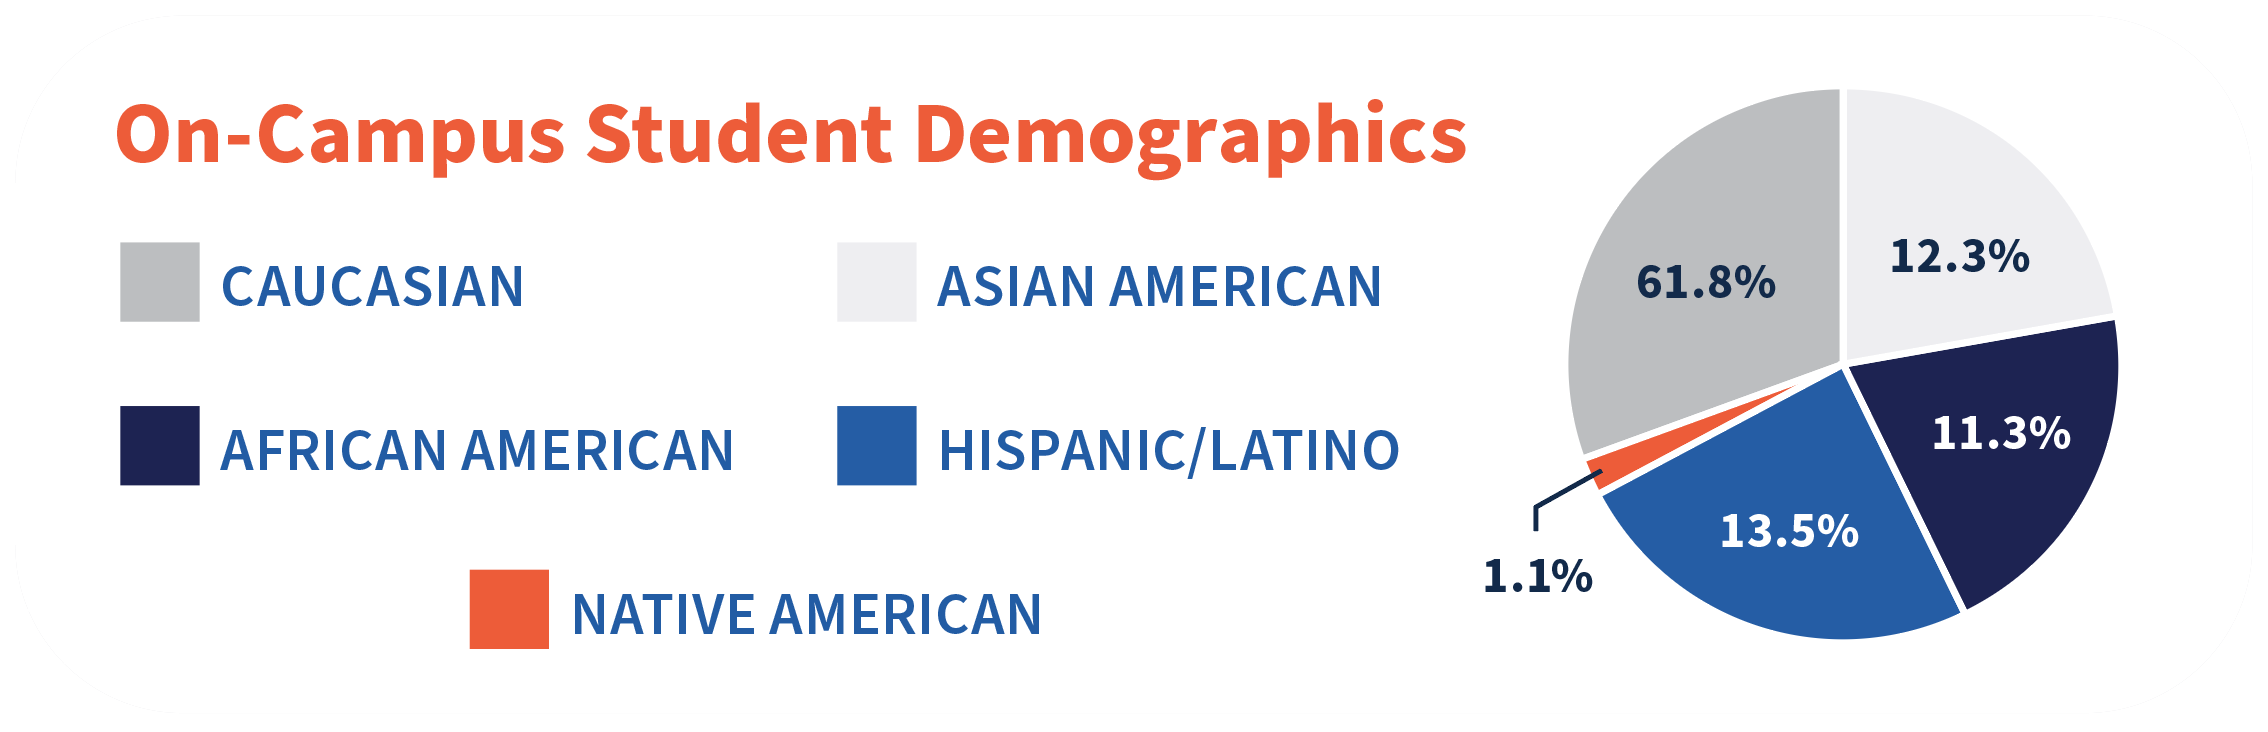 On-Campus Student Demographics